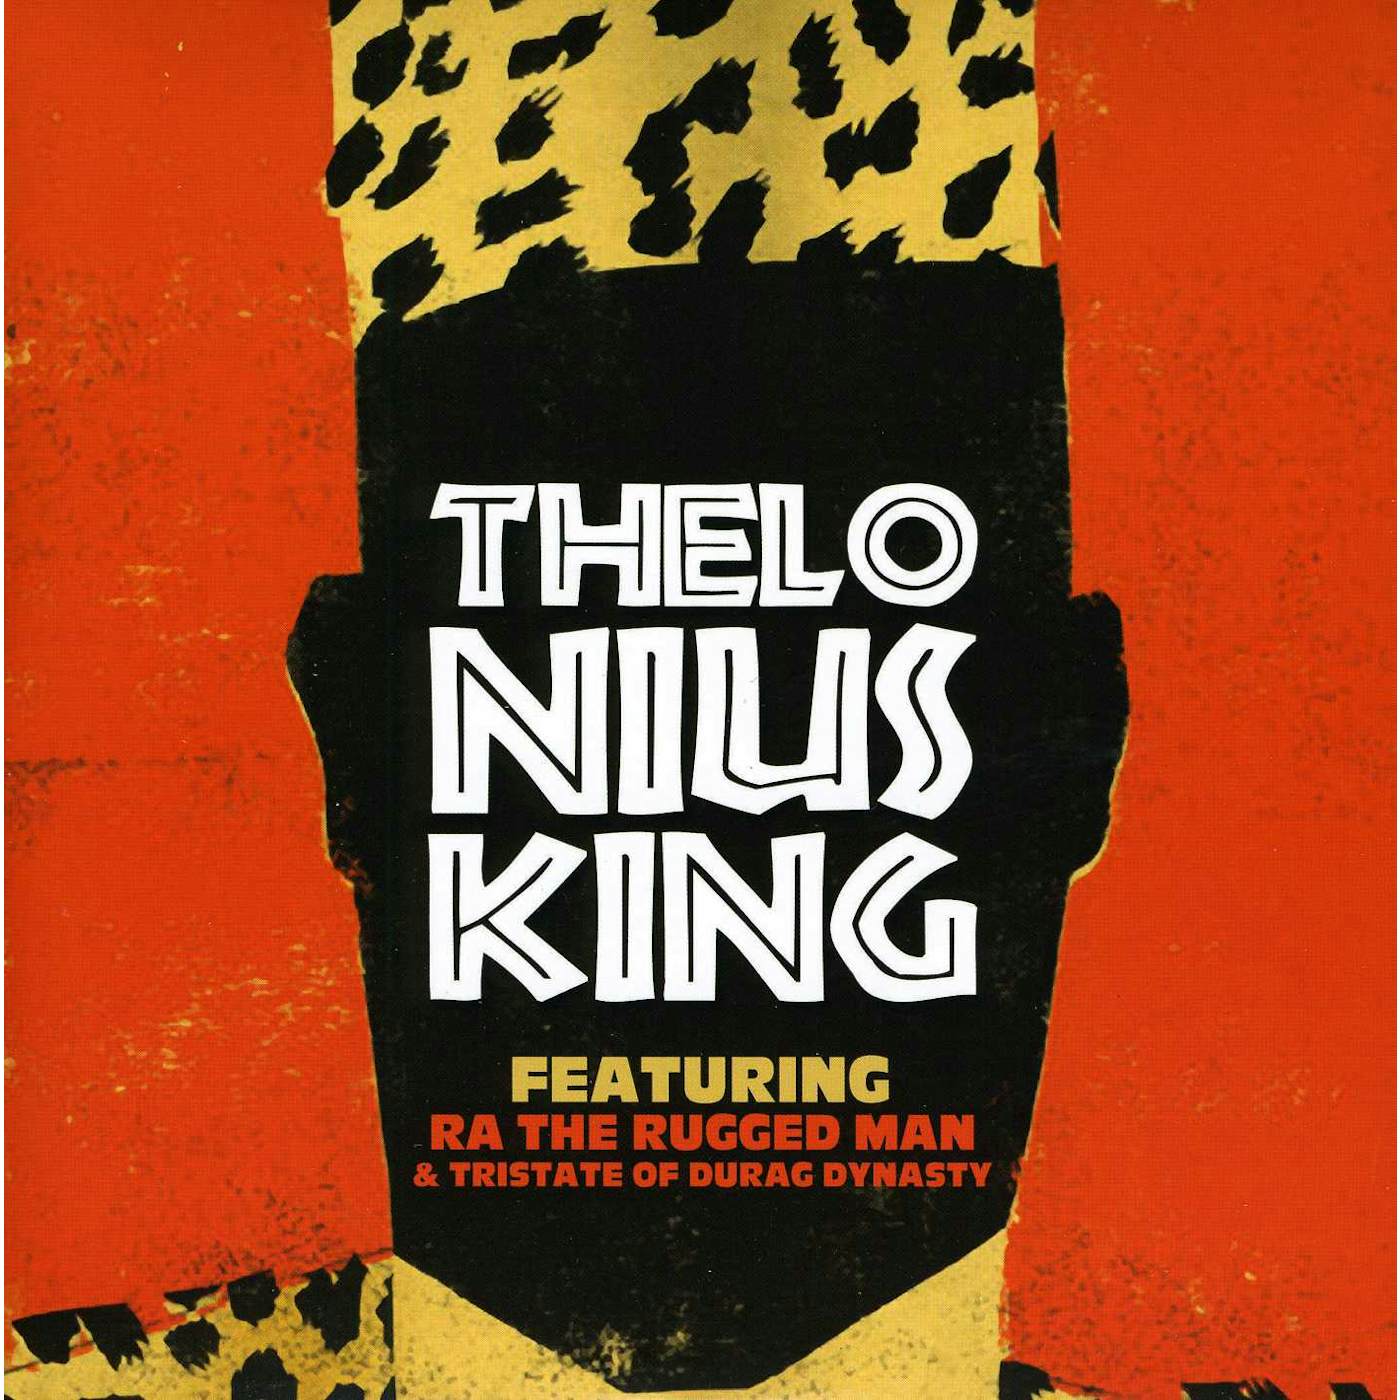 Blu Thelonius King Vinyl Record